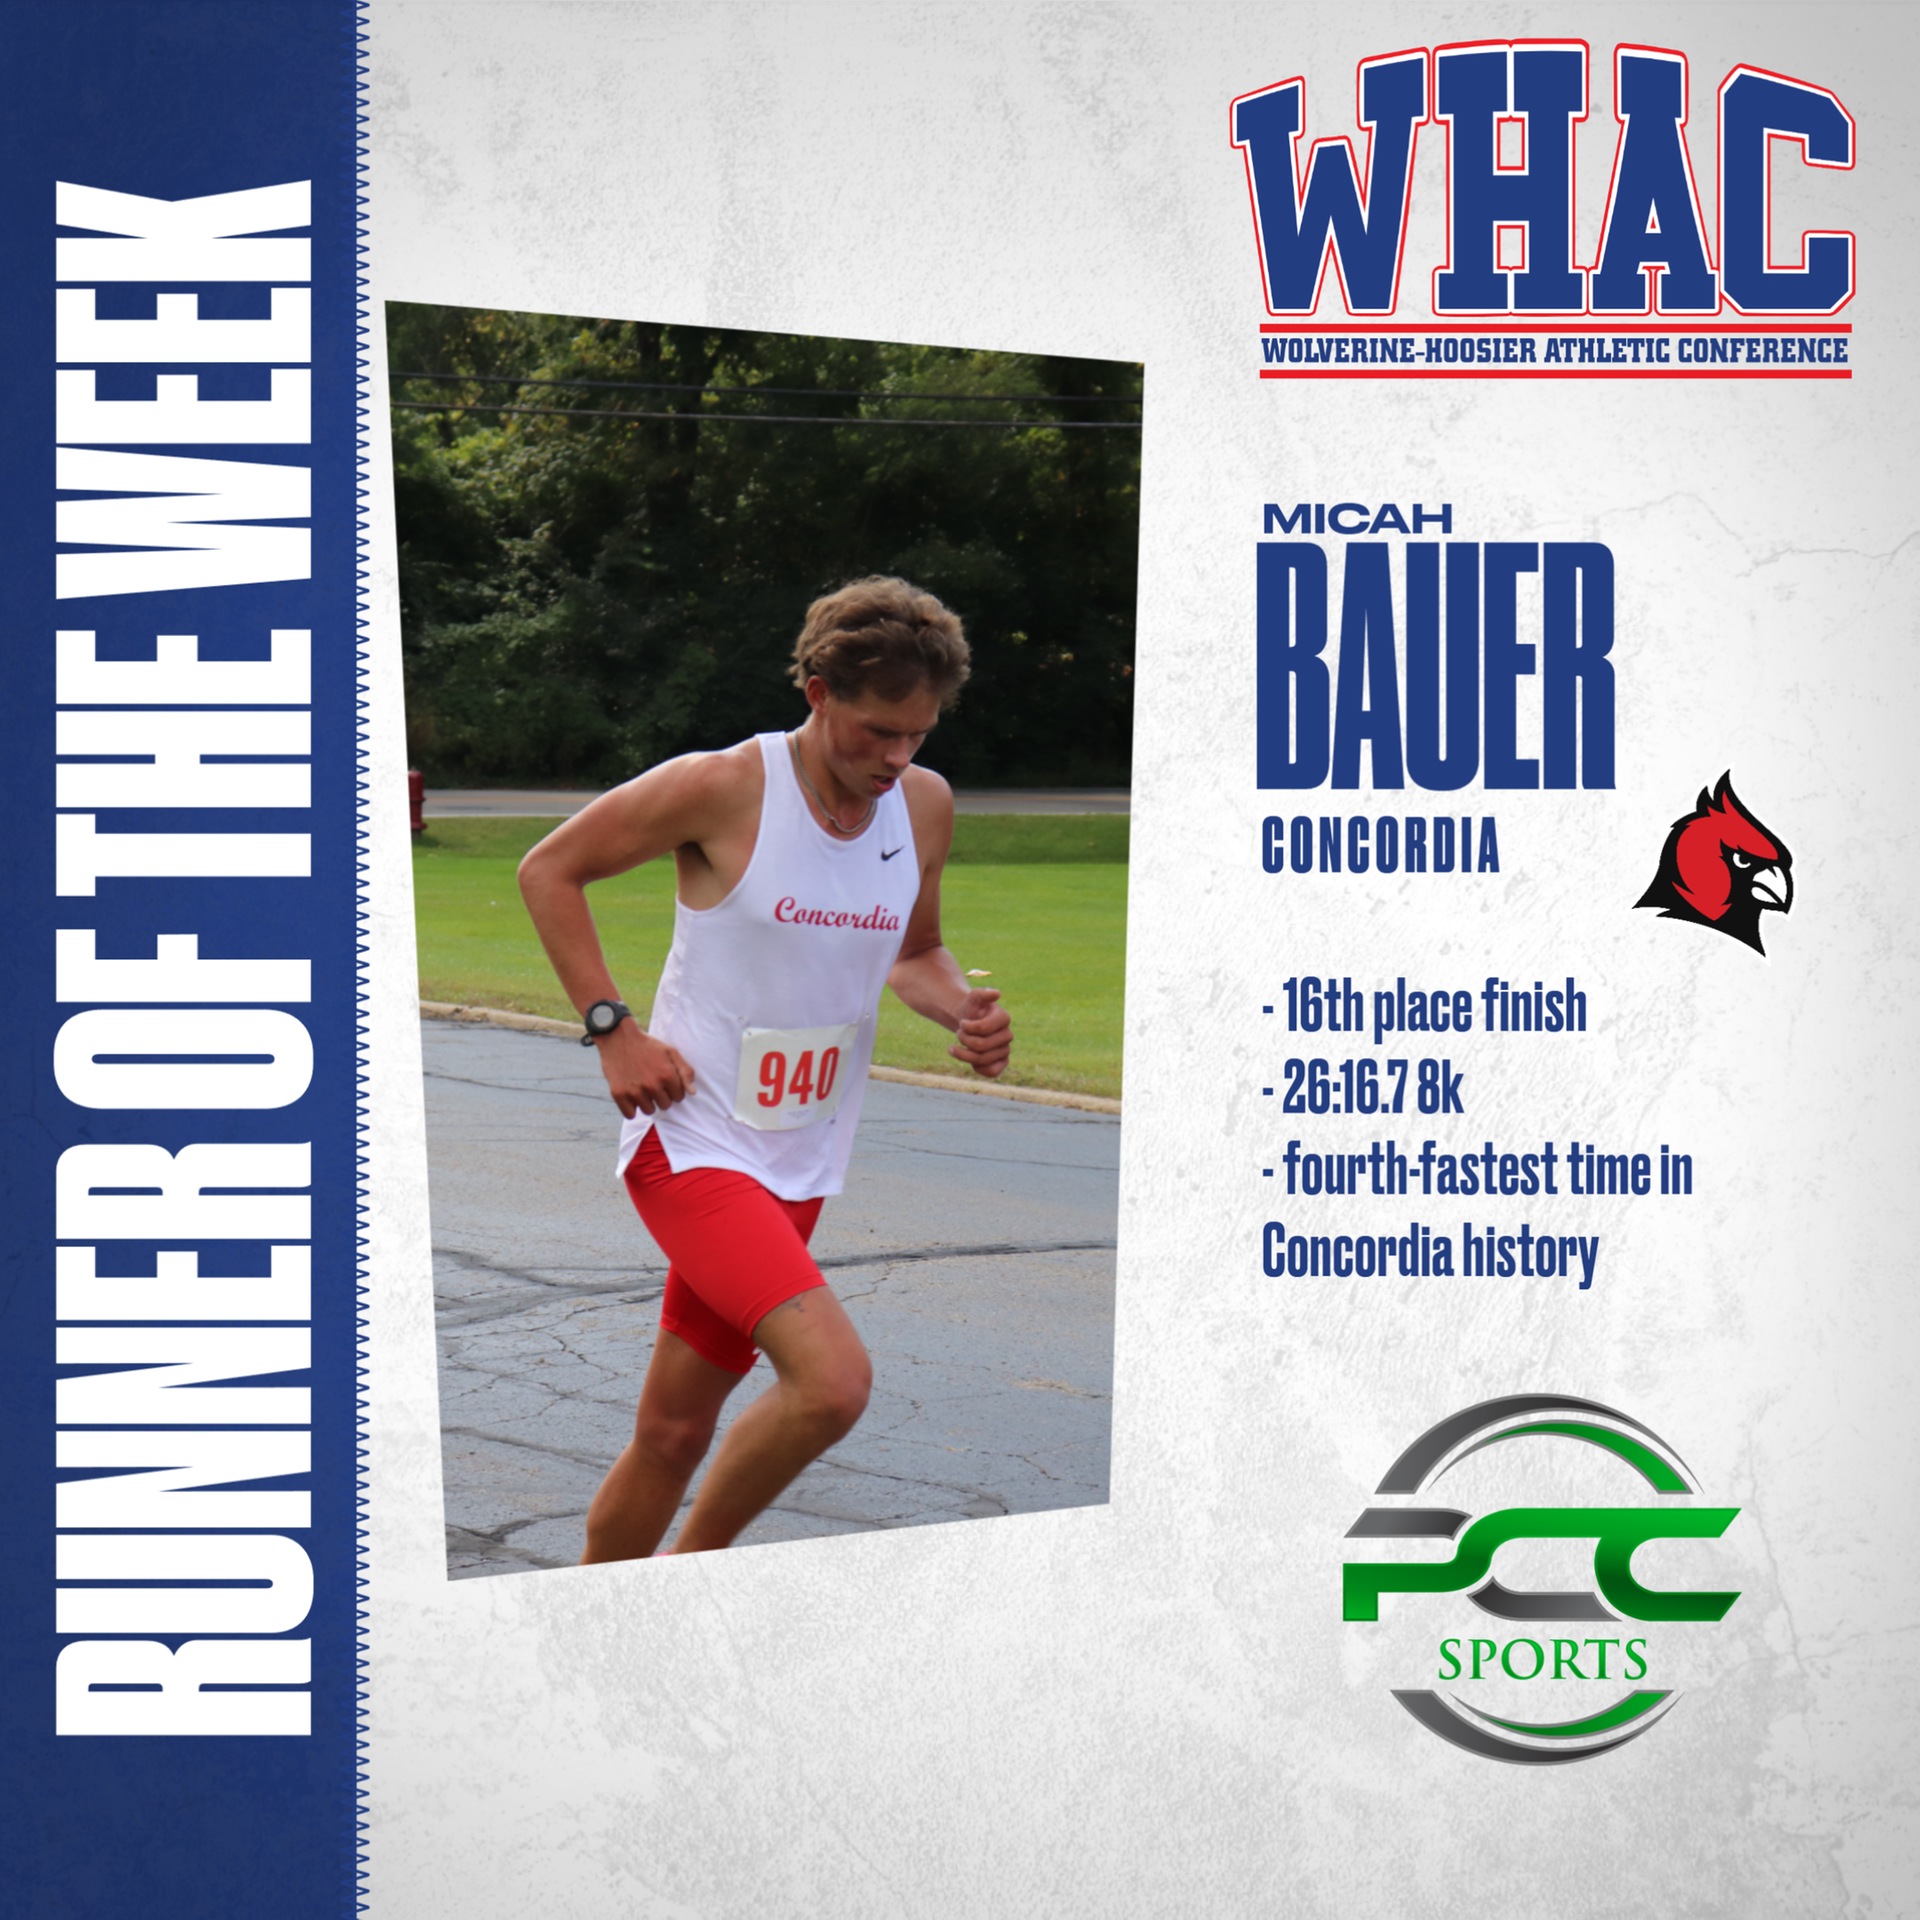 Micah Bauer named WHAC Men's Runner of the Week